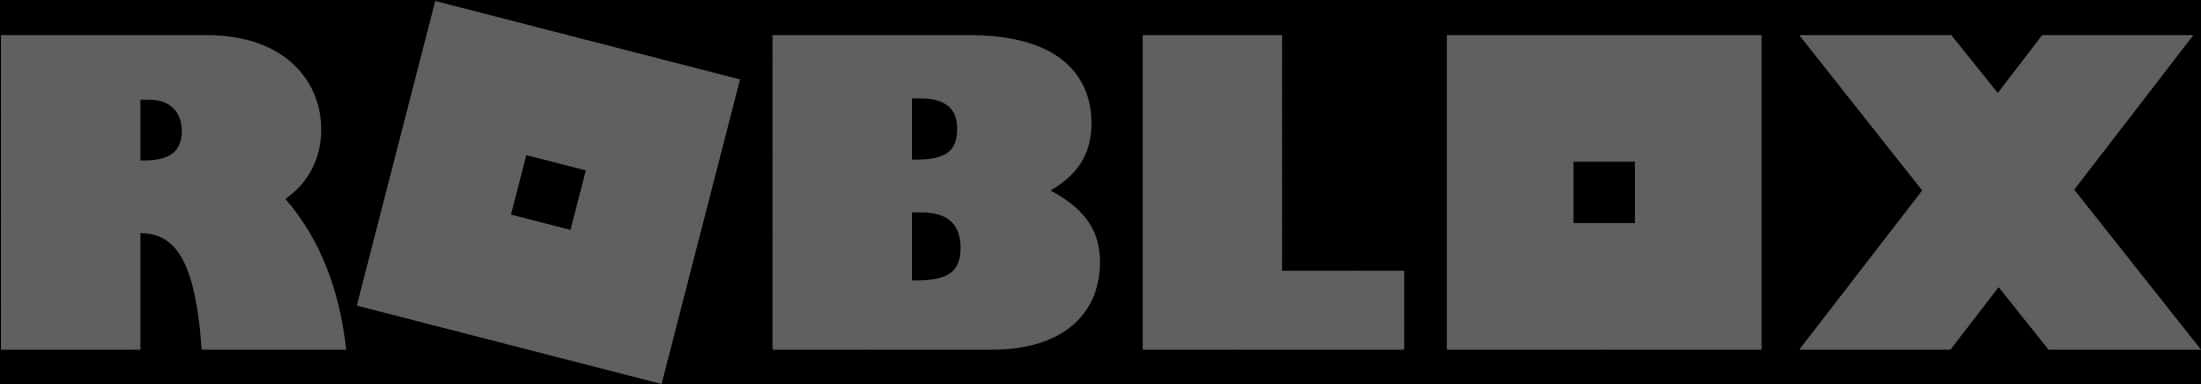 Roblox Logo Blackand White PNG